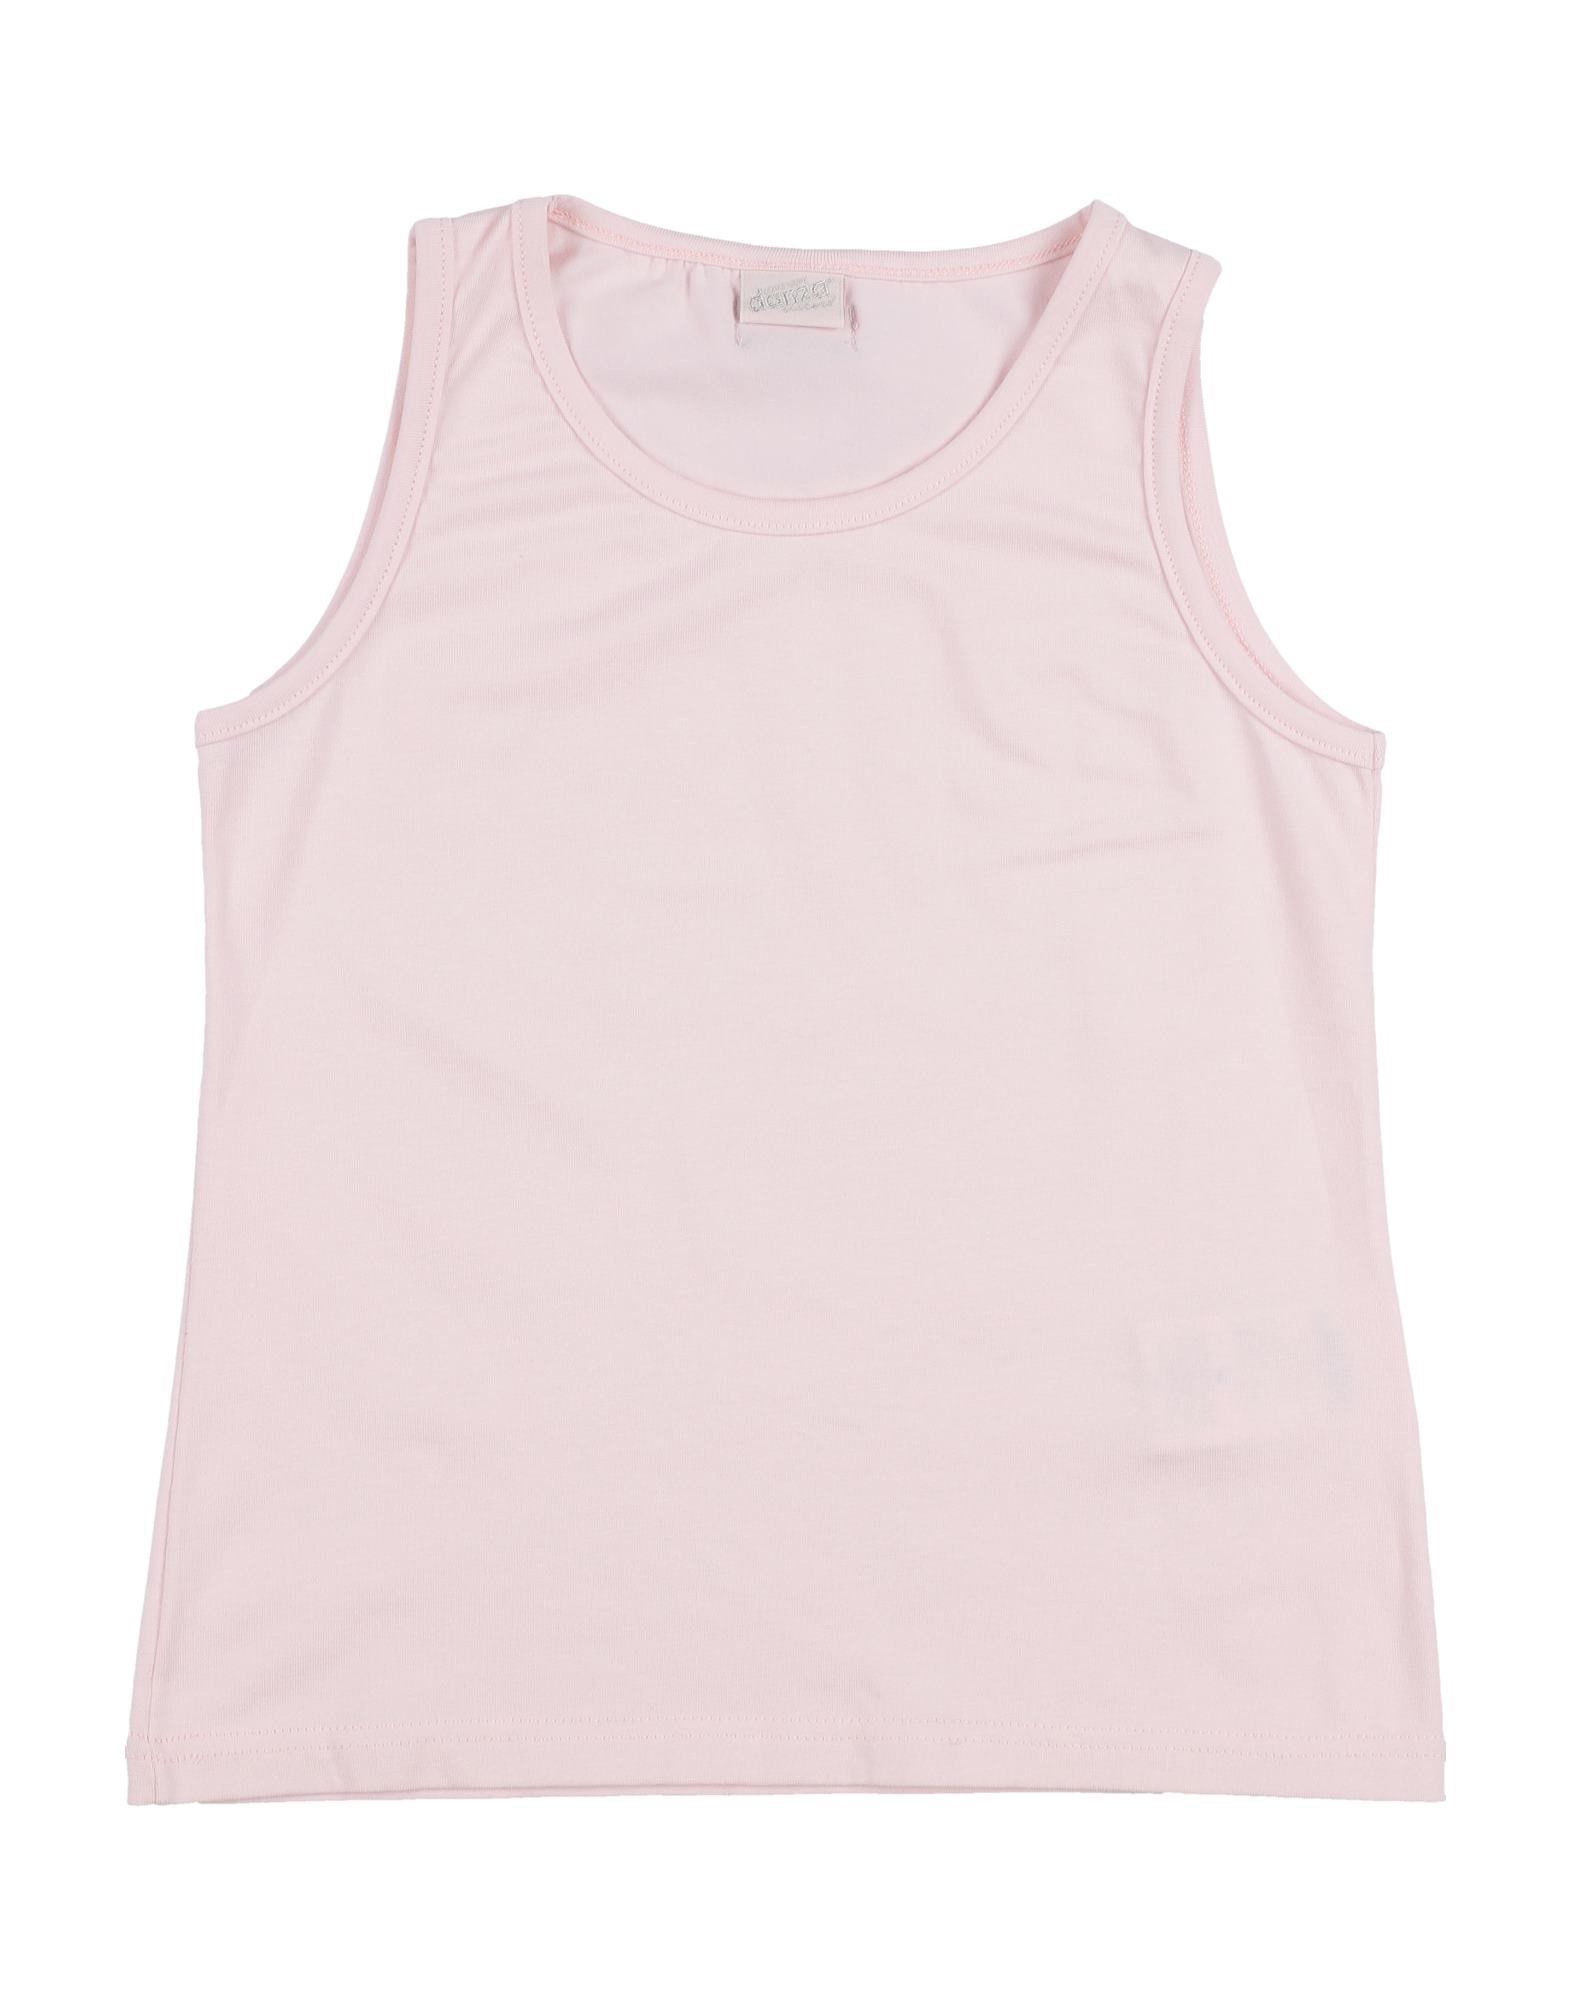 Dimensione Danza Sisters Kids' T-shirts In Pink